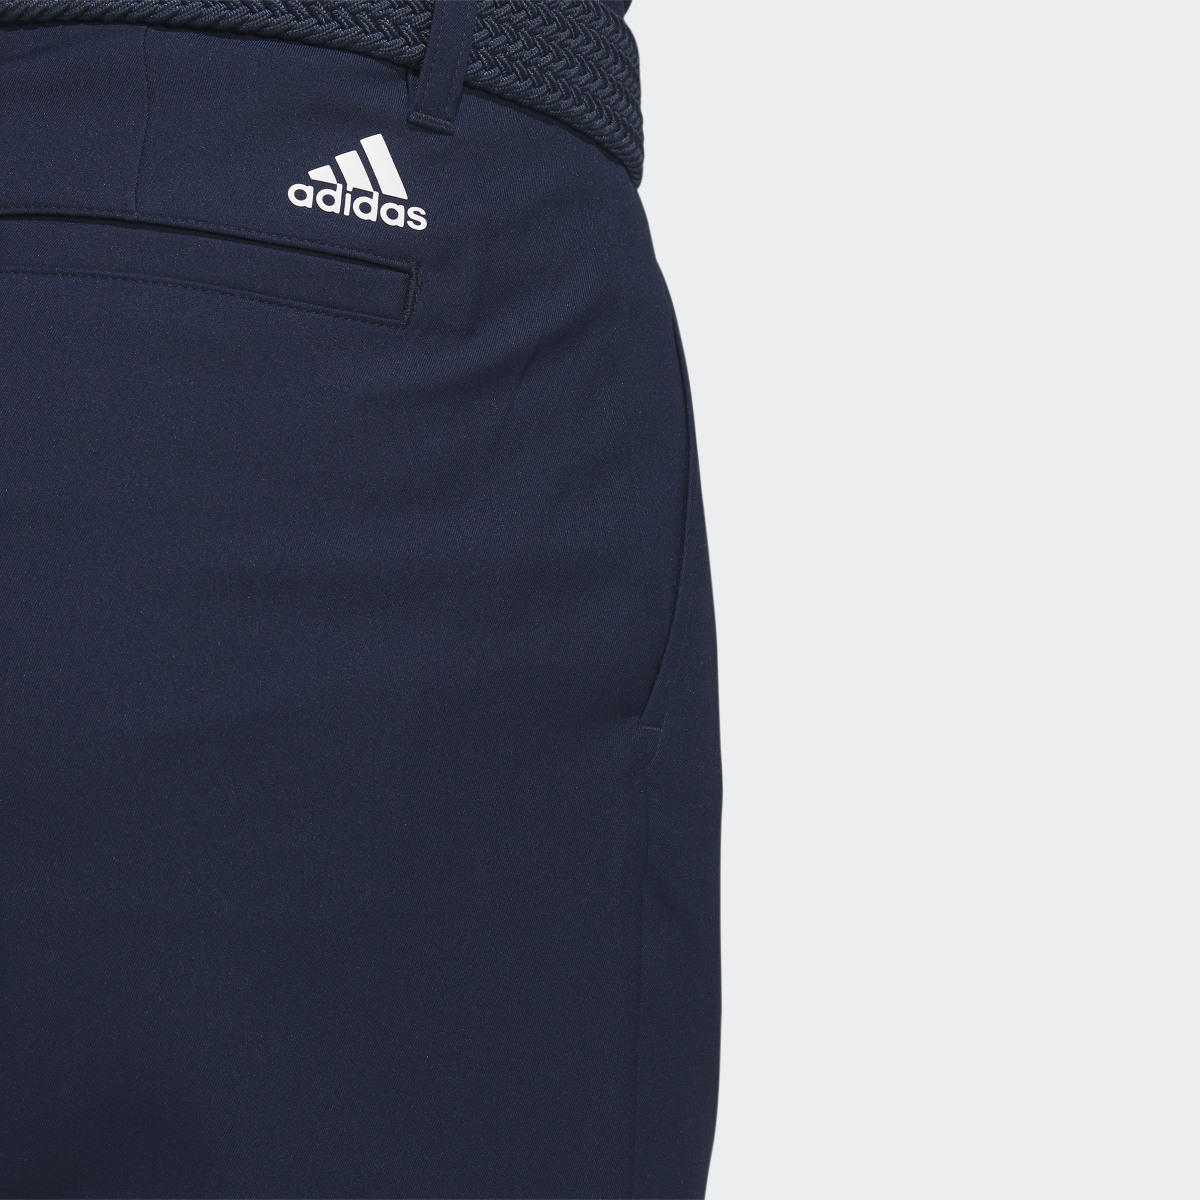 Adidas Ultimate365 Pants. 6